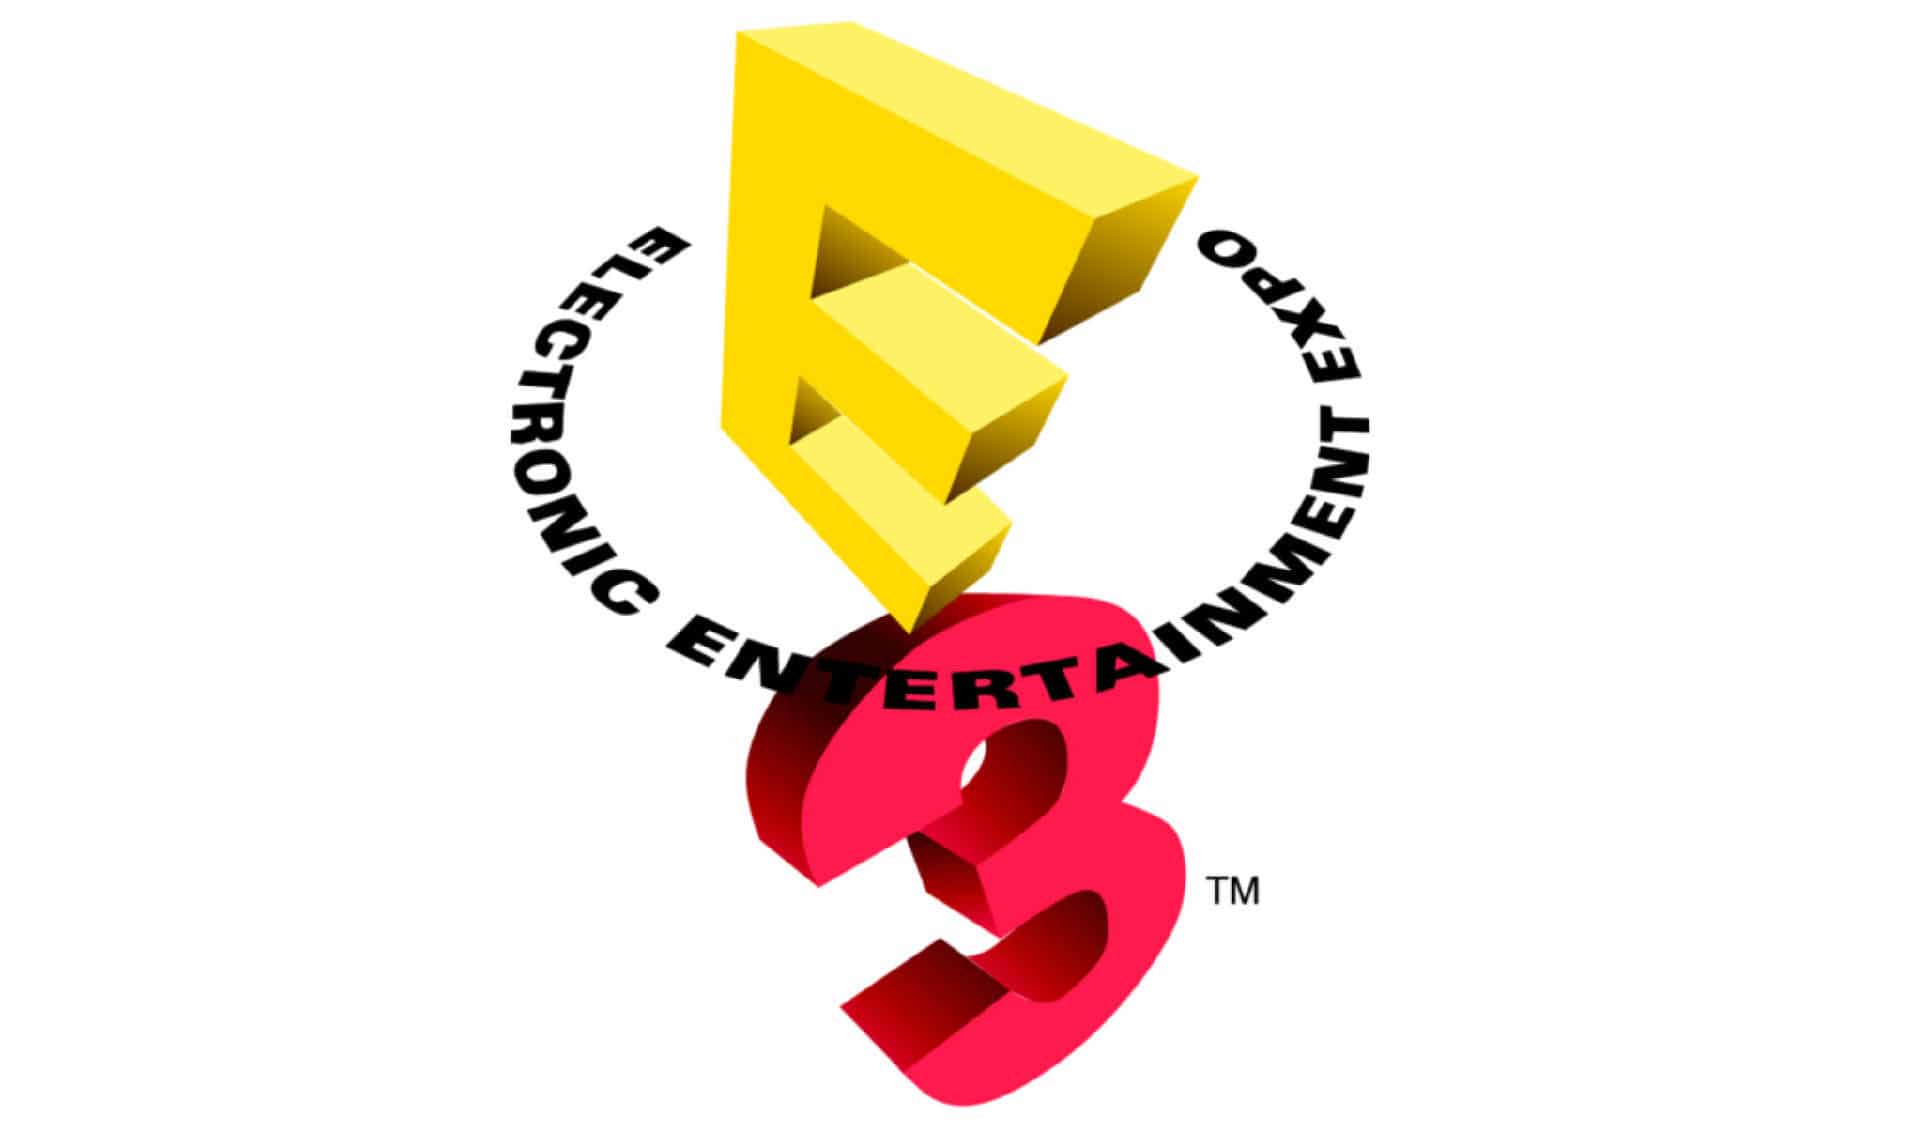 Revelan lista de las compañías participantes en el E3 2017